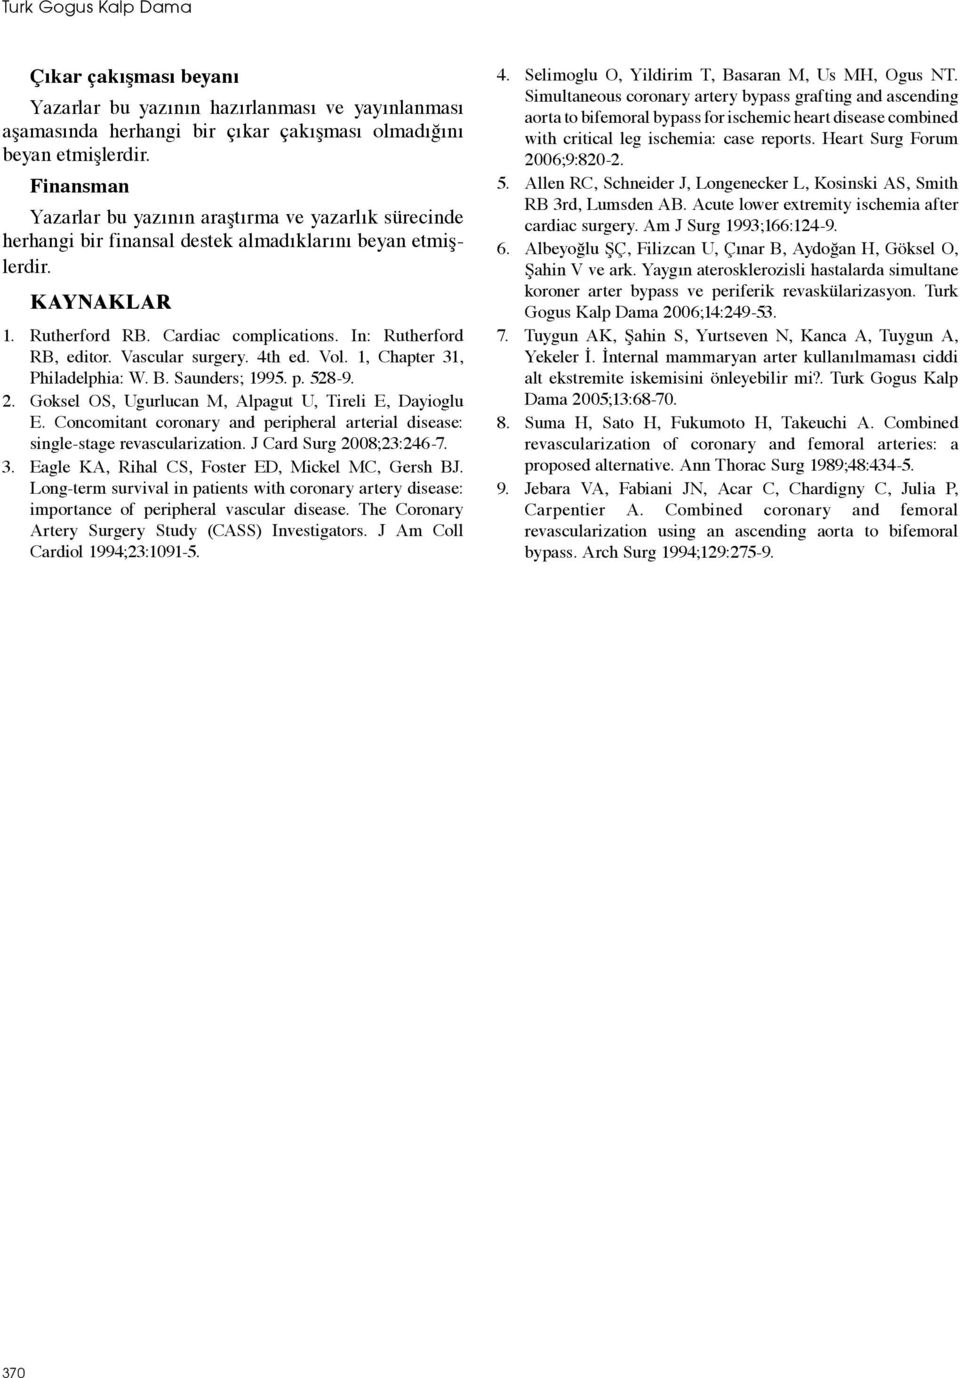 In: Rutherford RB, editor. Vascular surgery. 4th ed. Vol. 1, Chapter 31, Philadelphia: W. B. Saunders; 1995. p. 528-9. 2. Goksel OS, Ugurlucan M, Alpagut U, Tireli E, Dayioglu E.